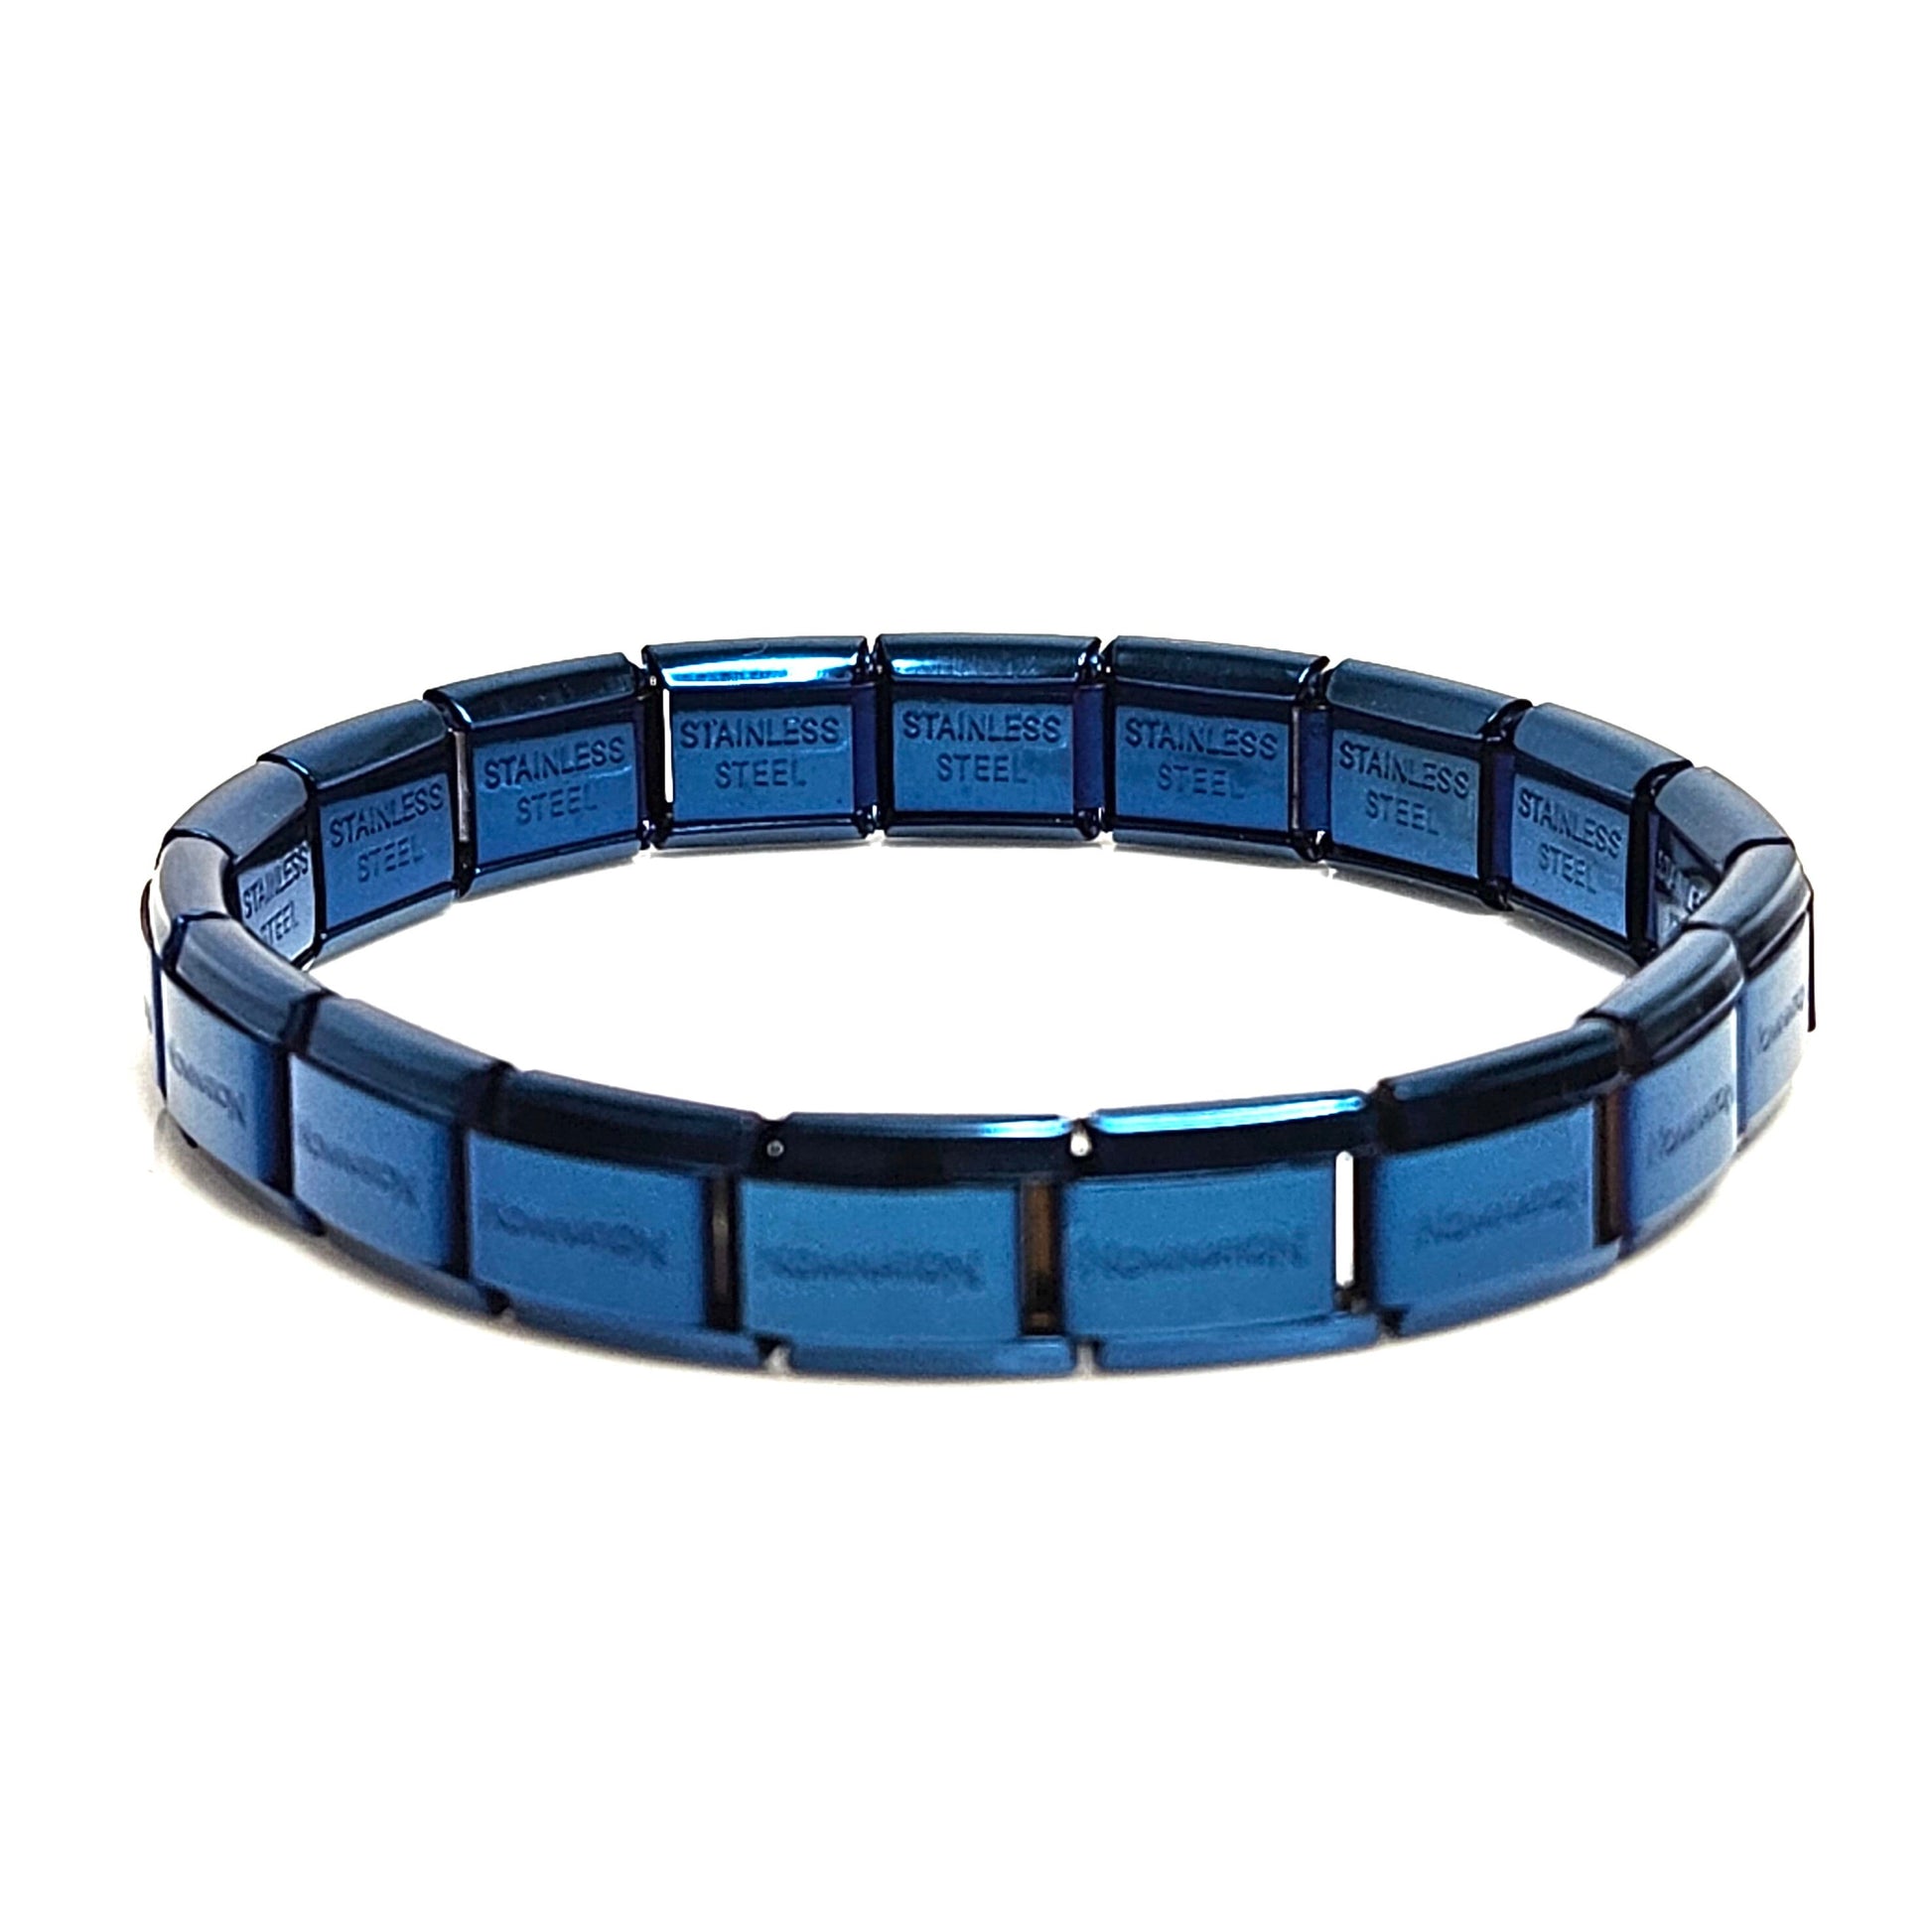 Mens Black Metallic Blue Stretch Bracelets, Stainless Steel Tile Bracelets for Men, Male Jewellery, Fashion Gift for Him